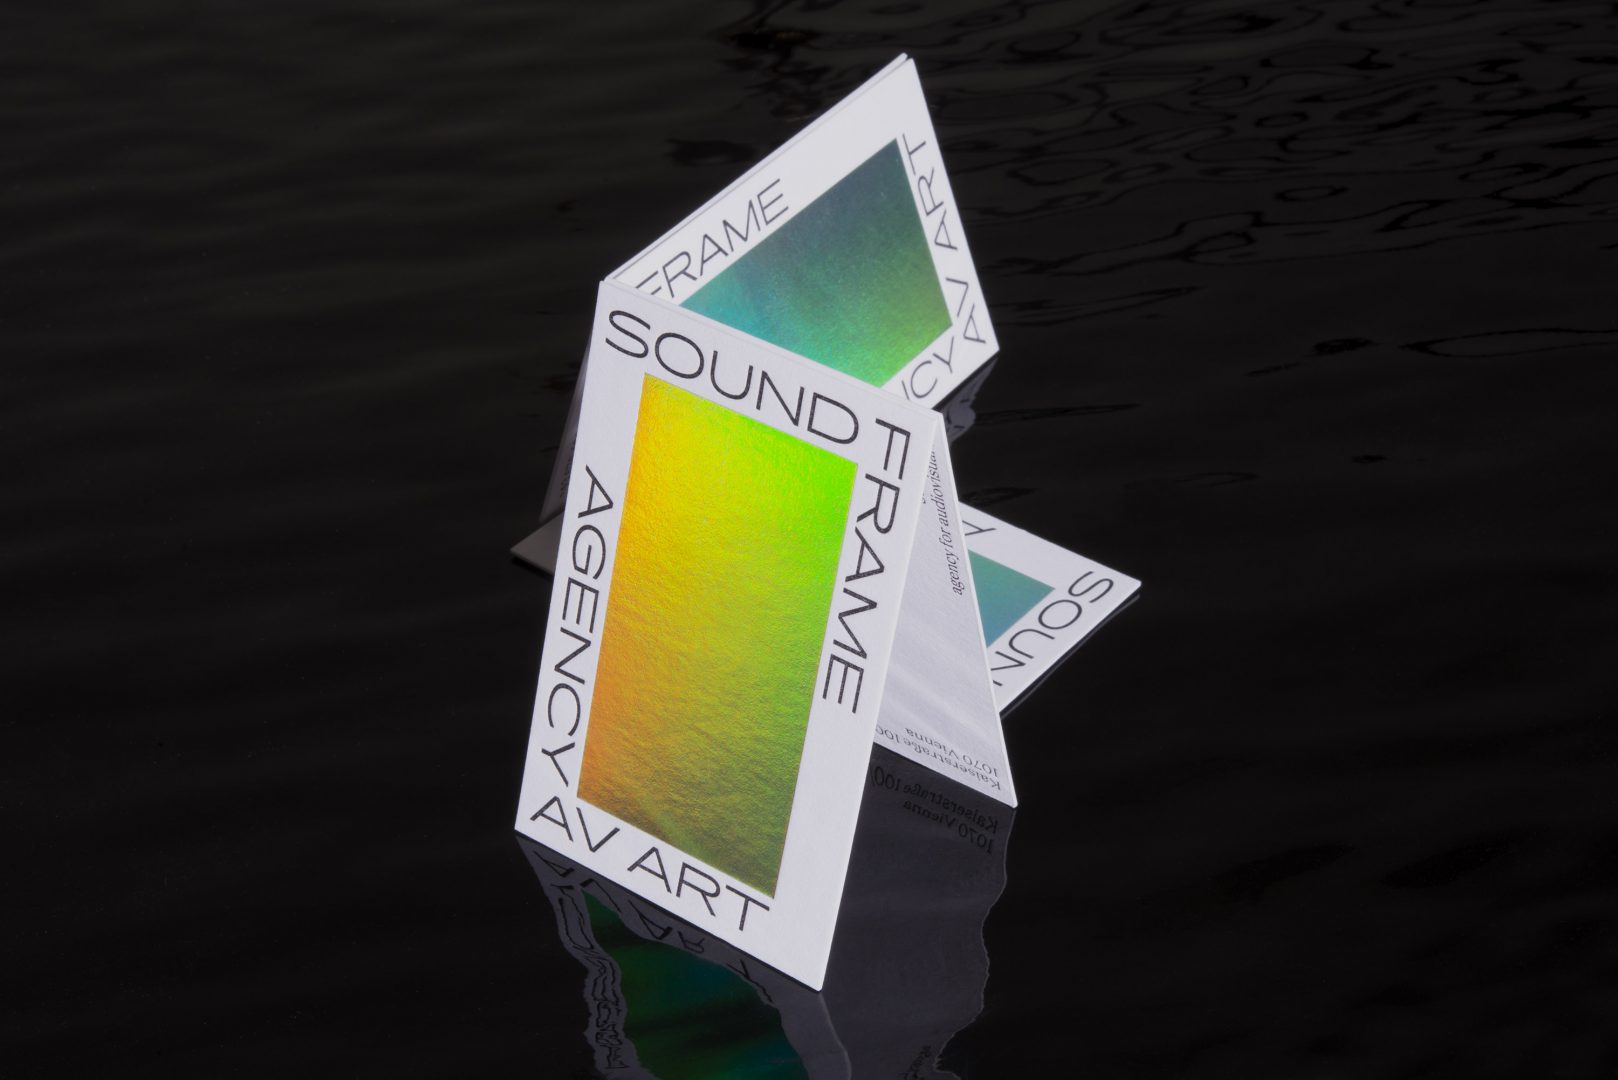 Soundframe Agency AV Art Visual Identity Wien